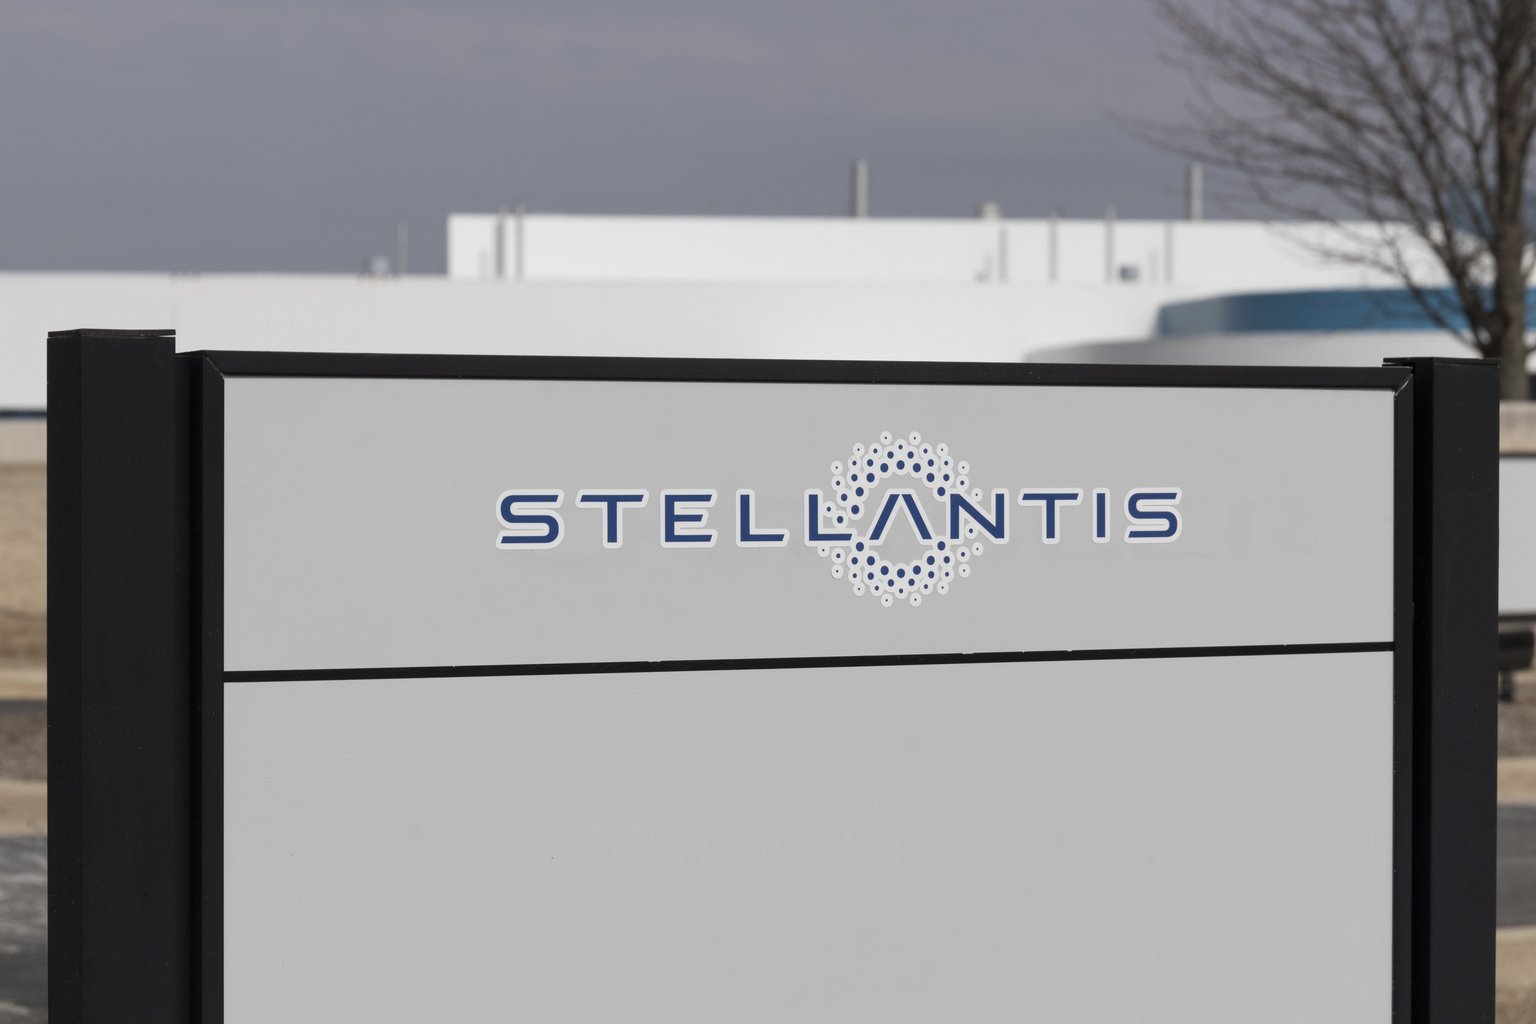 Stellantis makes investment in lidar technology via its venture fund